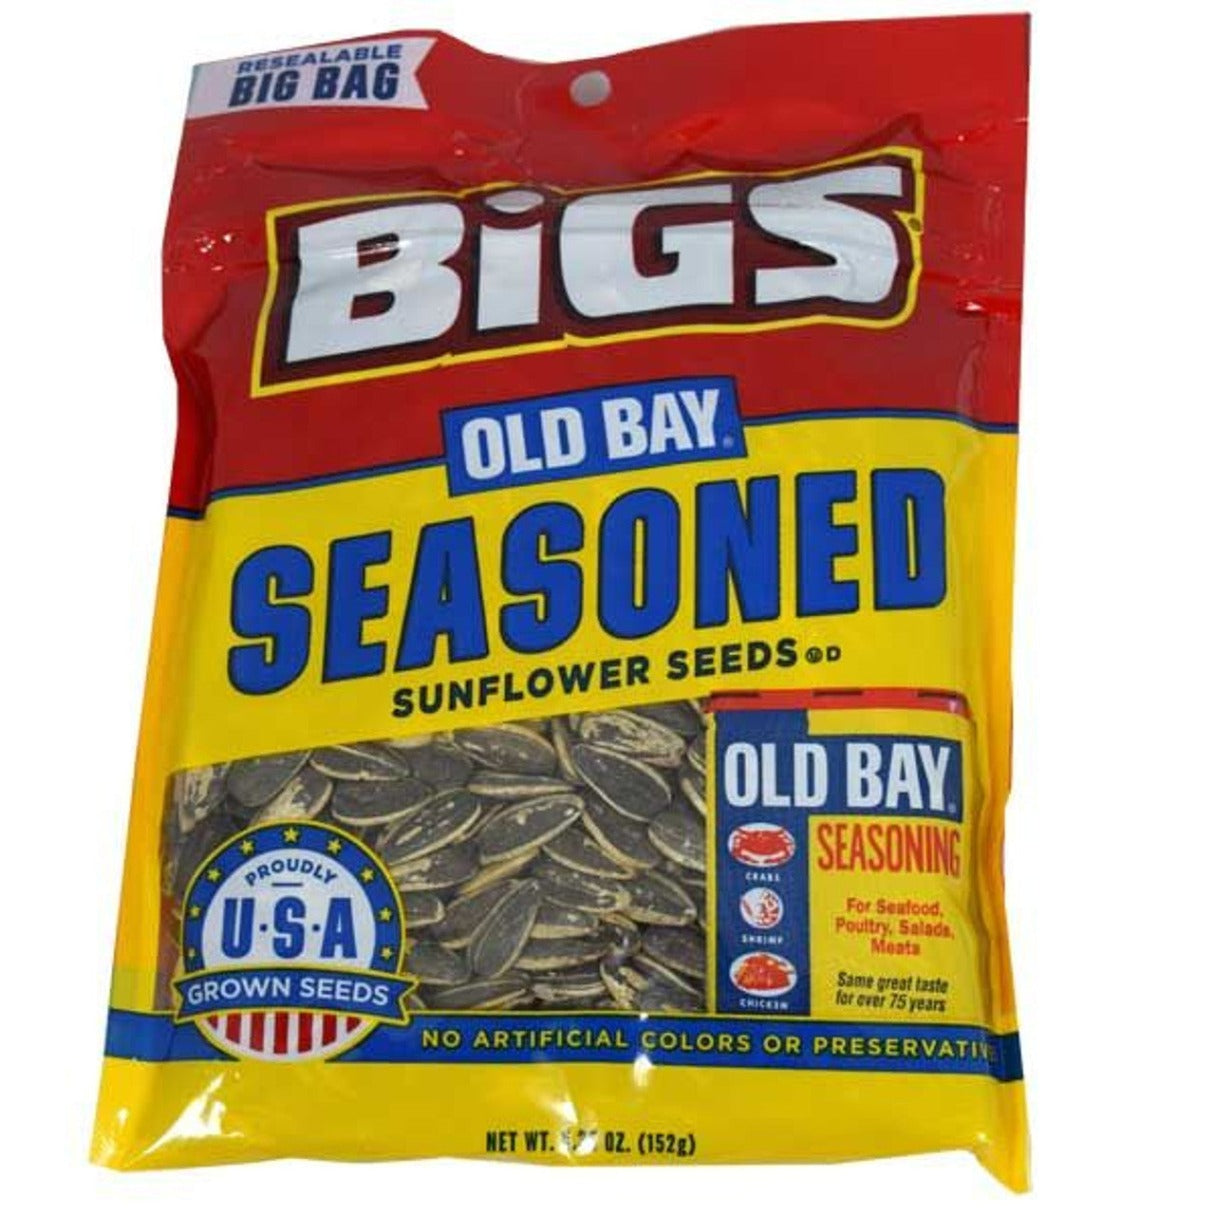 Bigs Old Bay Seasoning Sunflower Seeds 5.35oz - 12ct